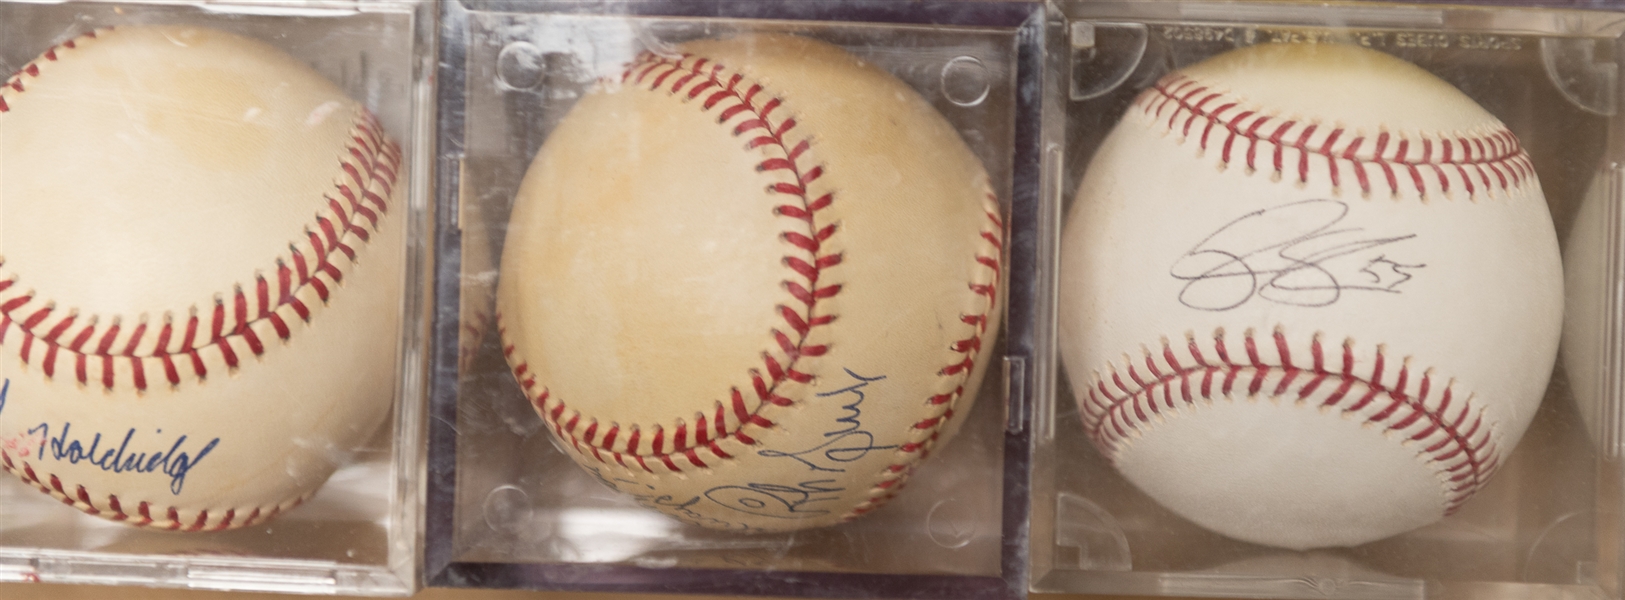 Lot of (15) Autographed Baseballs w. R. Zimmerman, Cox, J. Hamilton, T Clark, Davis, and Others (JSA Auction Letter)